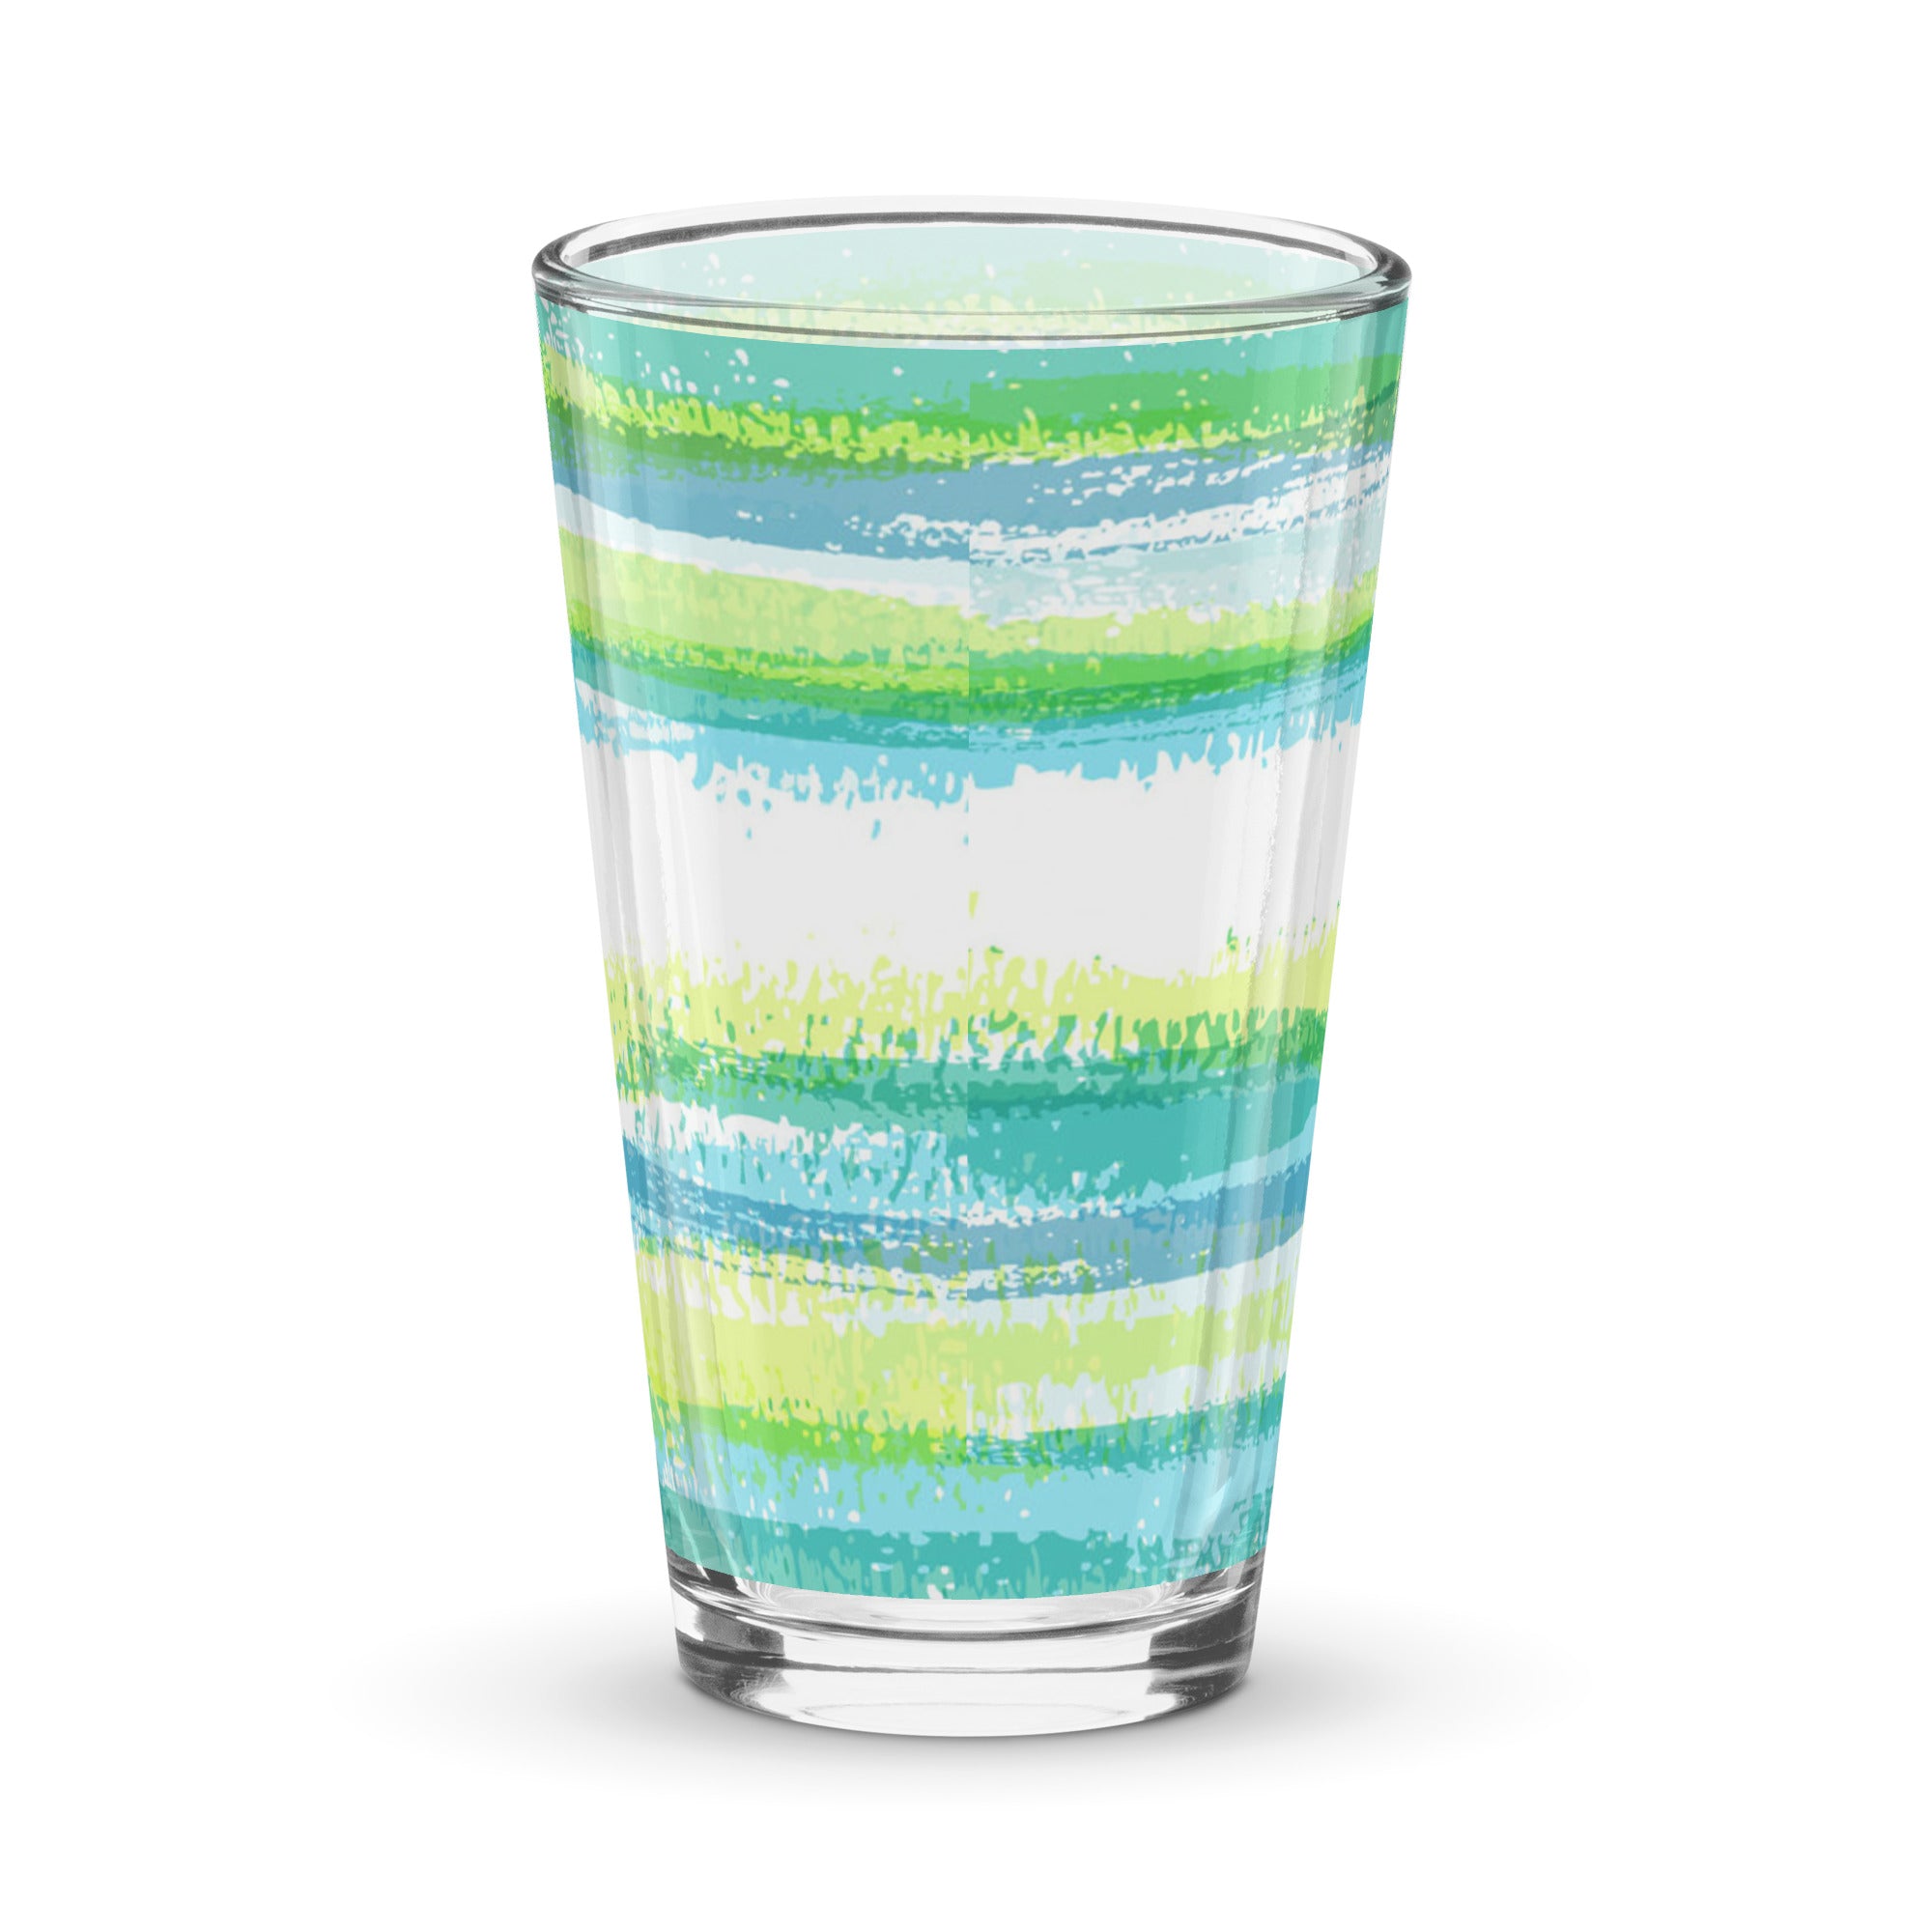 Shaker Pint Glass (16oz) - Teal & Blue Stripes